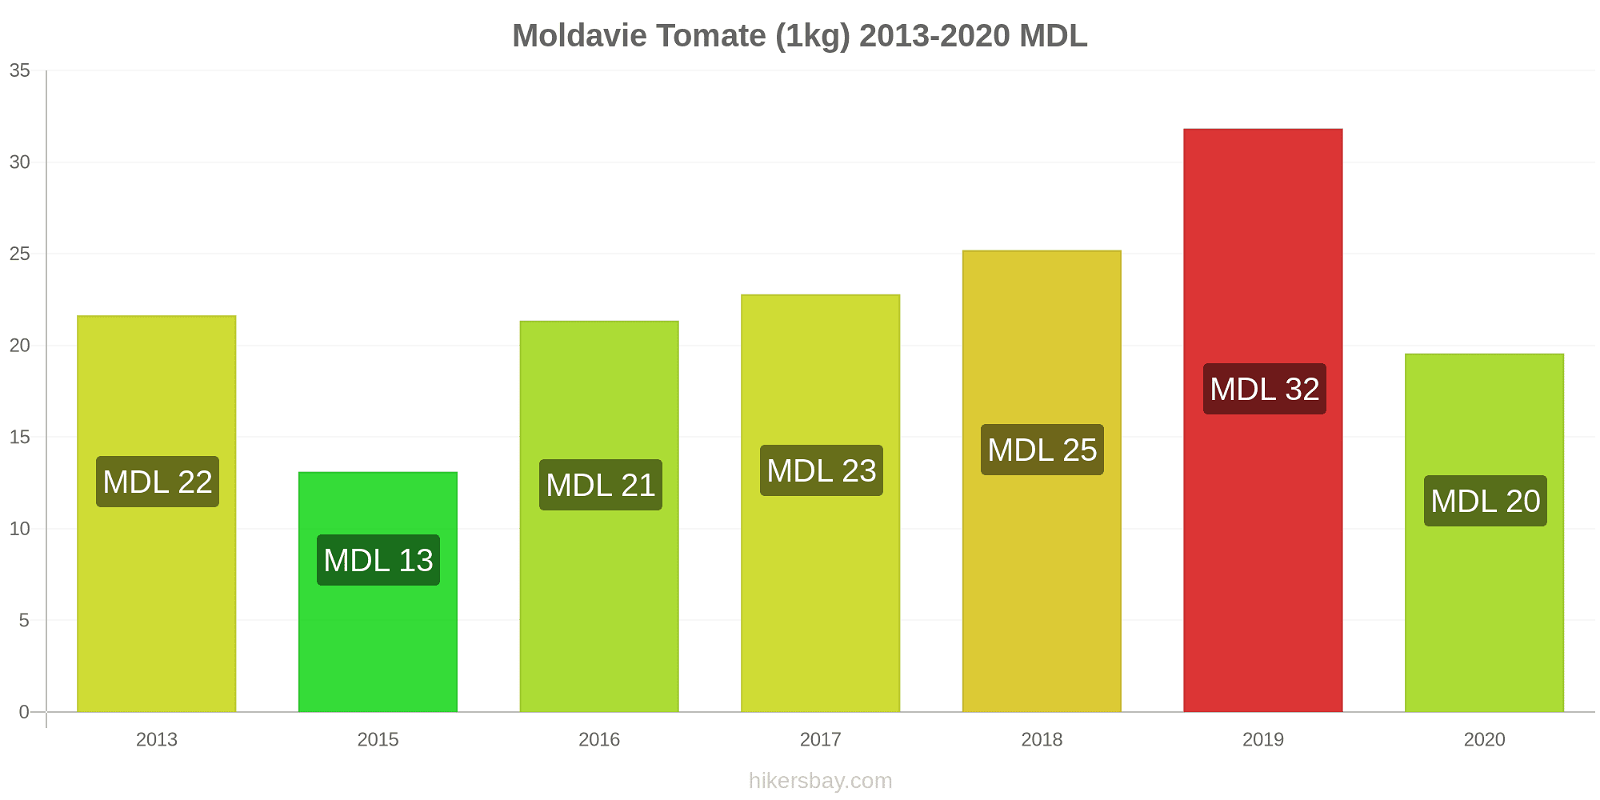 Moldavie changements de prix Tomate (1kg) hikersbay.com